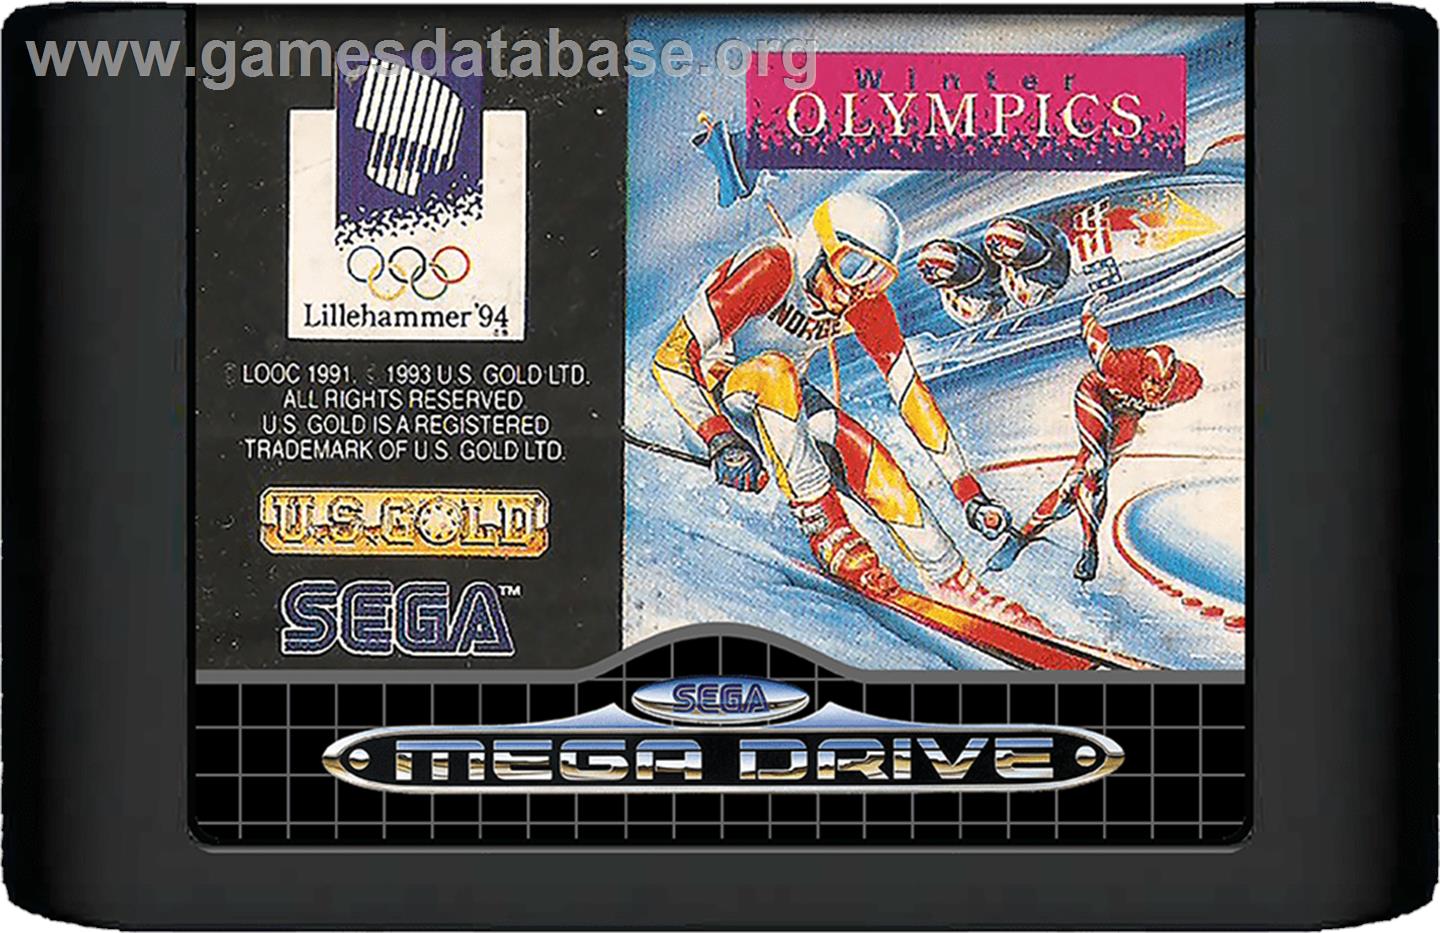 Winter Olympics: Lillehammer '94 - Sega Genesis - Artwork - Cartridge